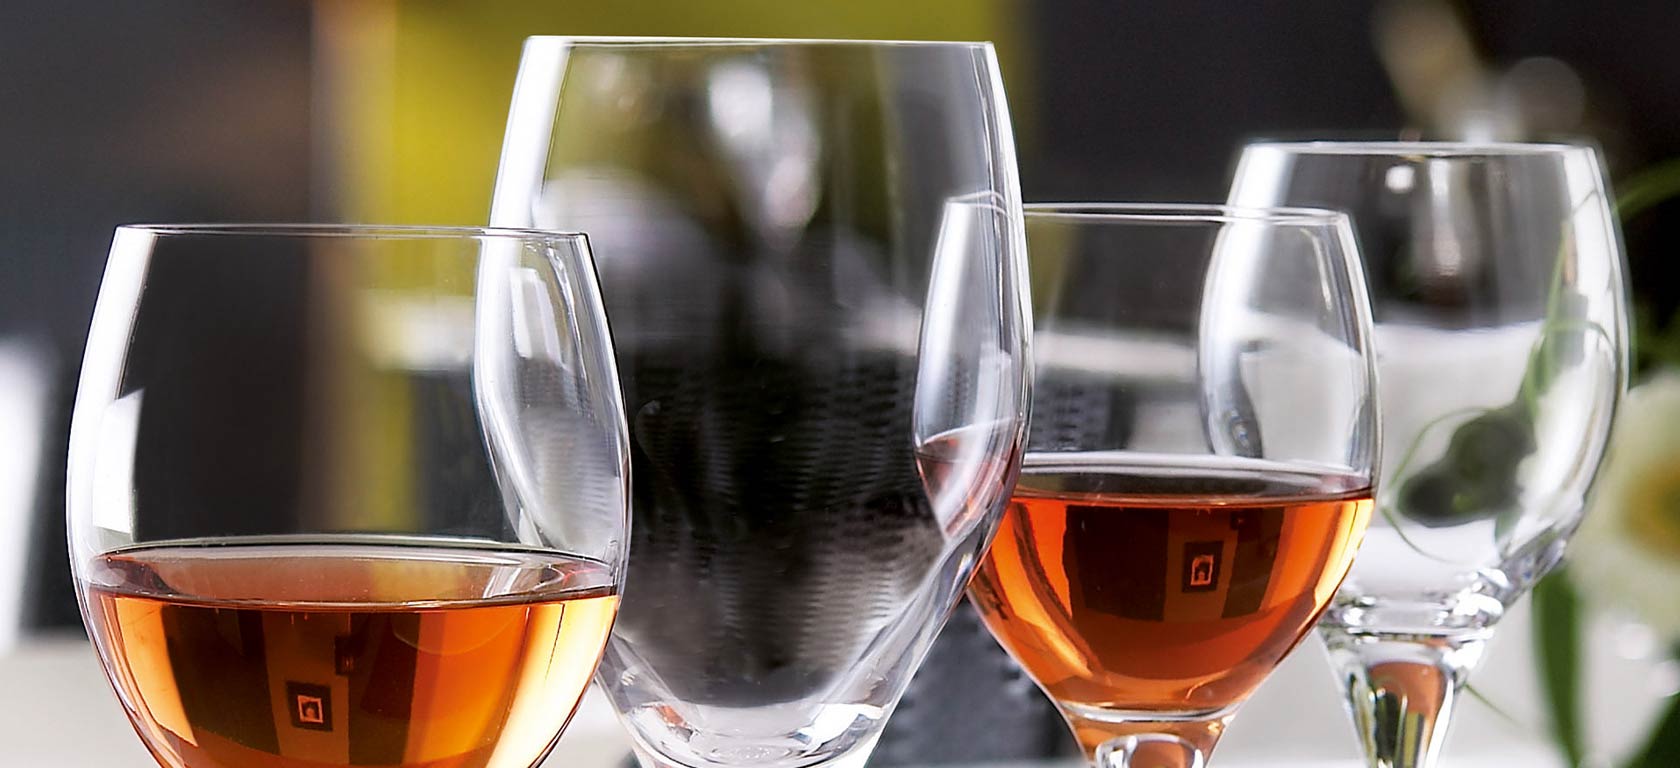 Close-up shot of crystal wine glasses holding amber liquid